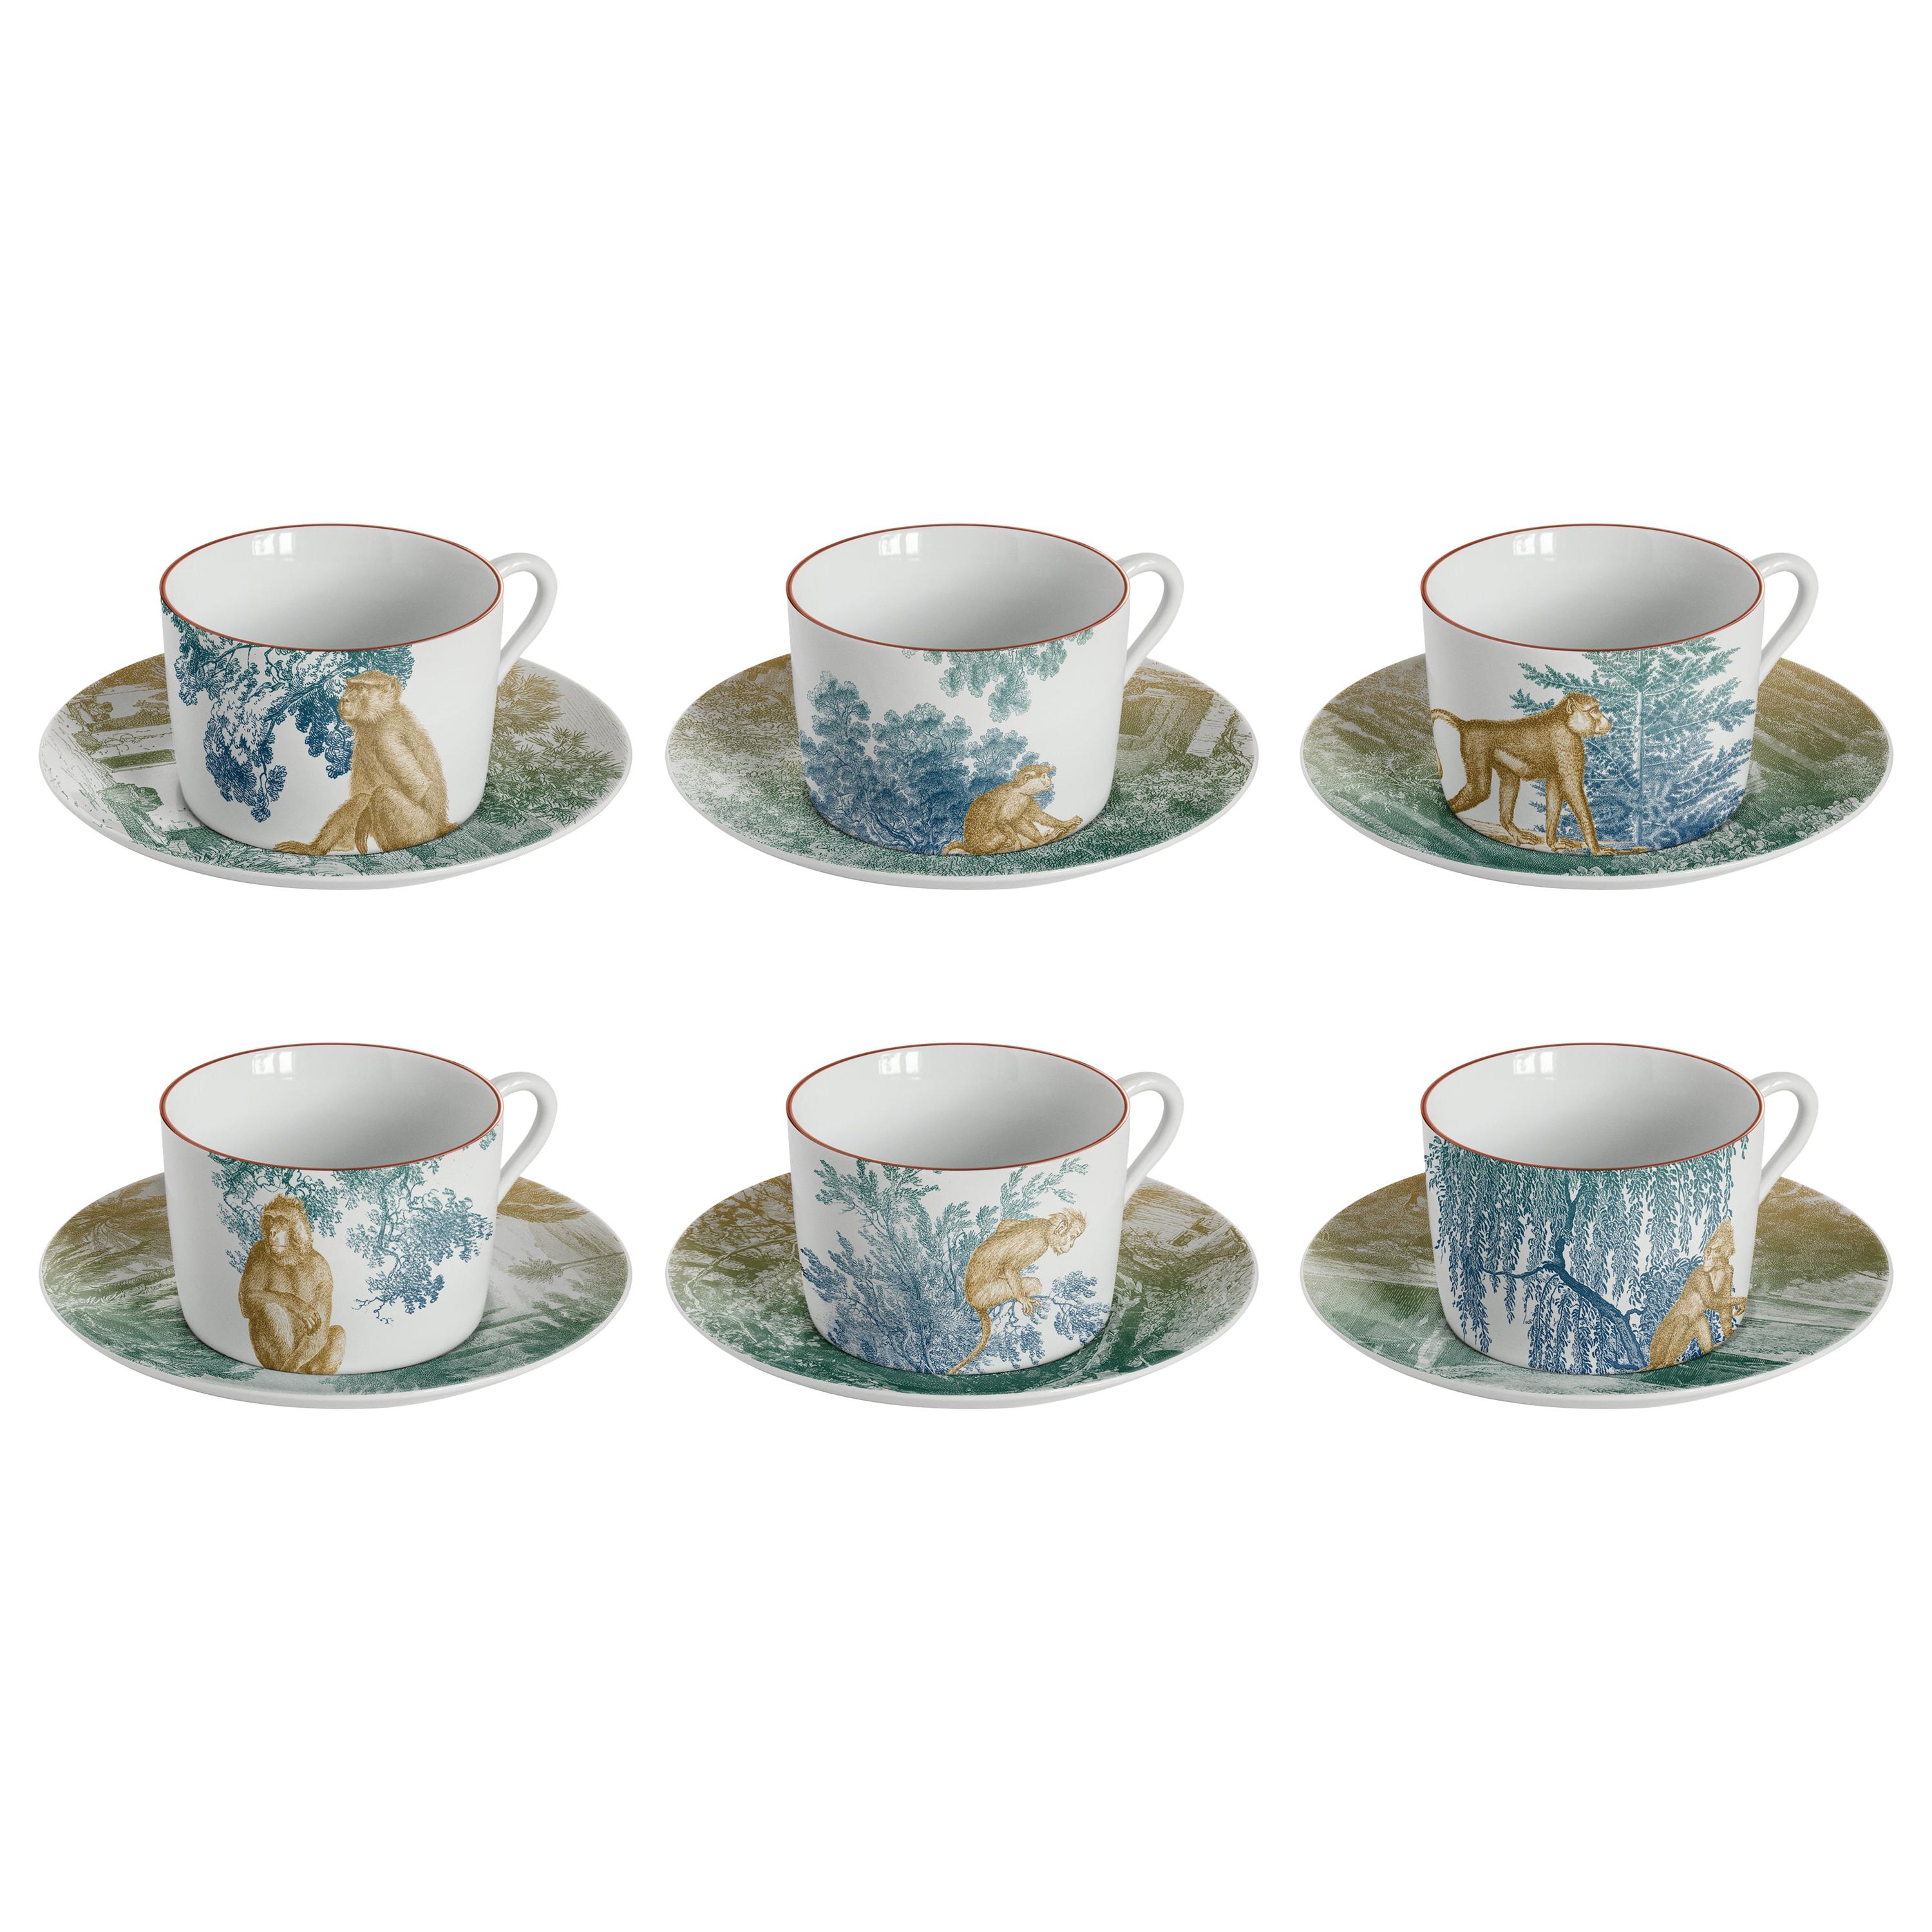 Galtaji, Tea Set with Six Contemporary Porcelains with Decorative Design